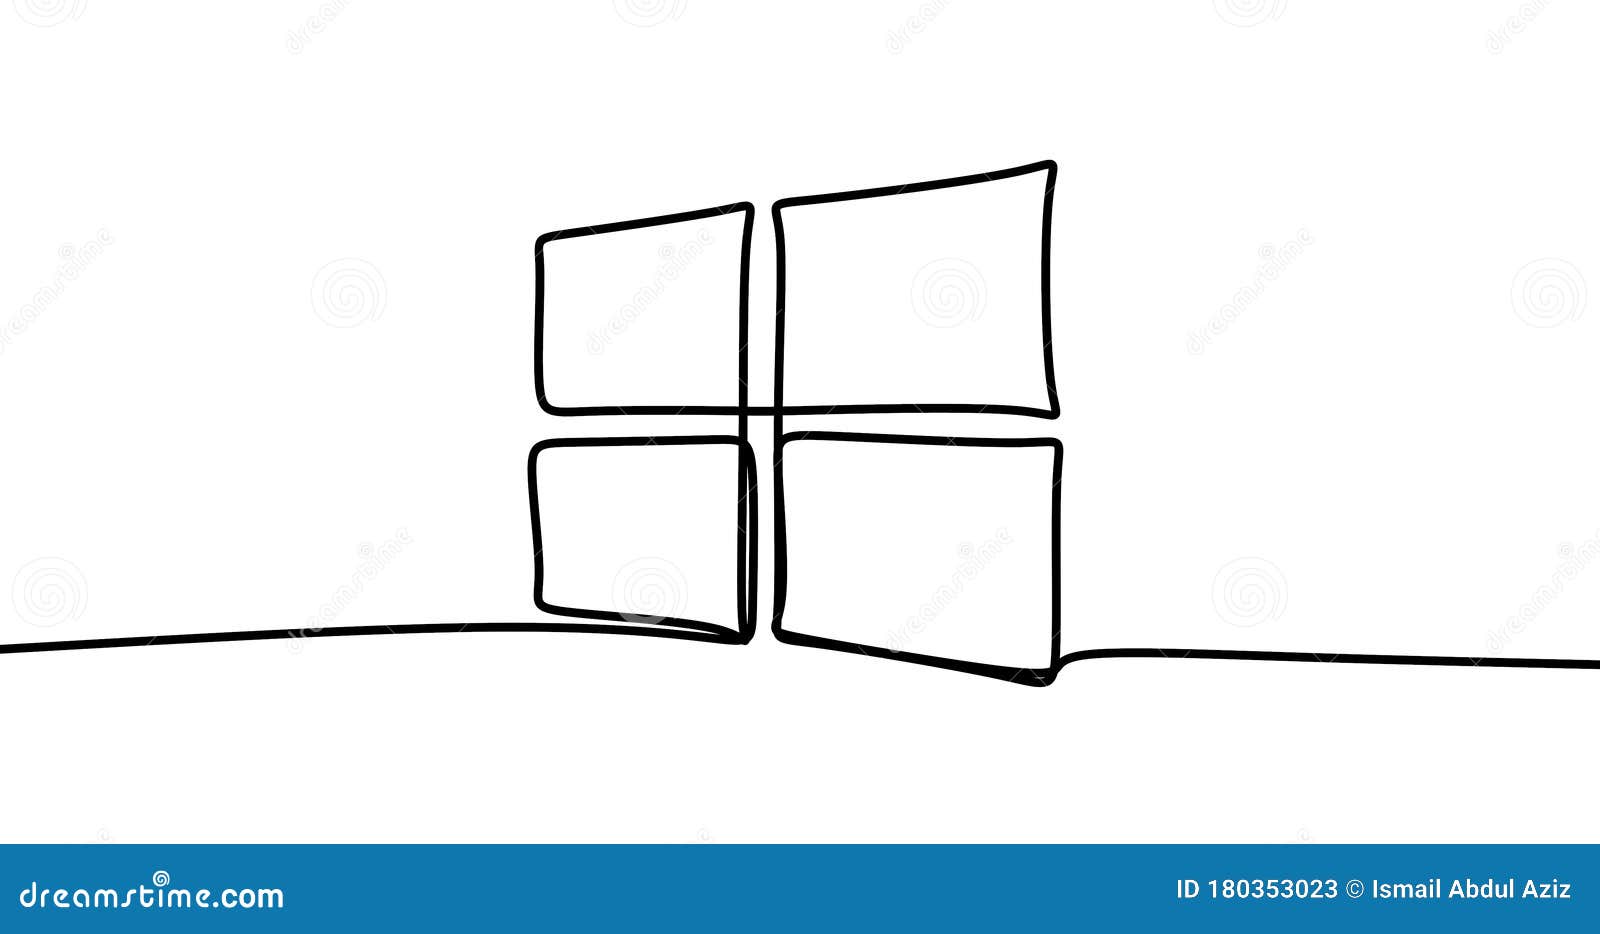 How to draw the Windows xp logo  YouTube